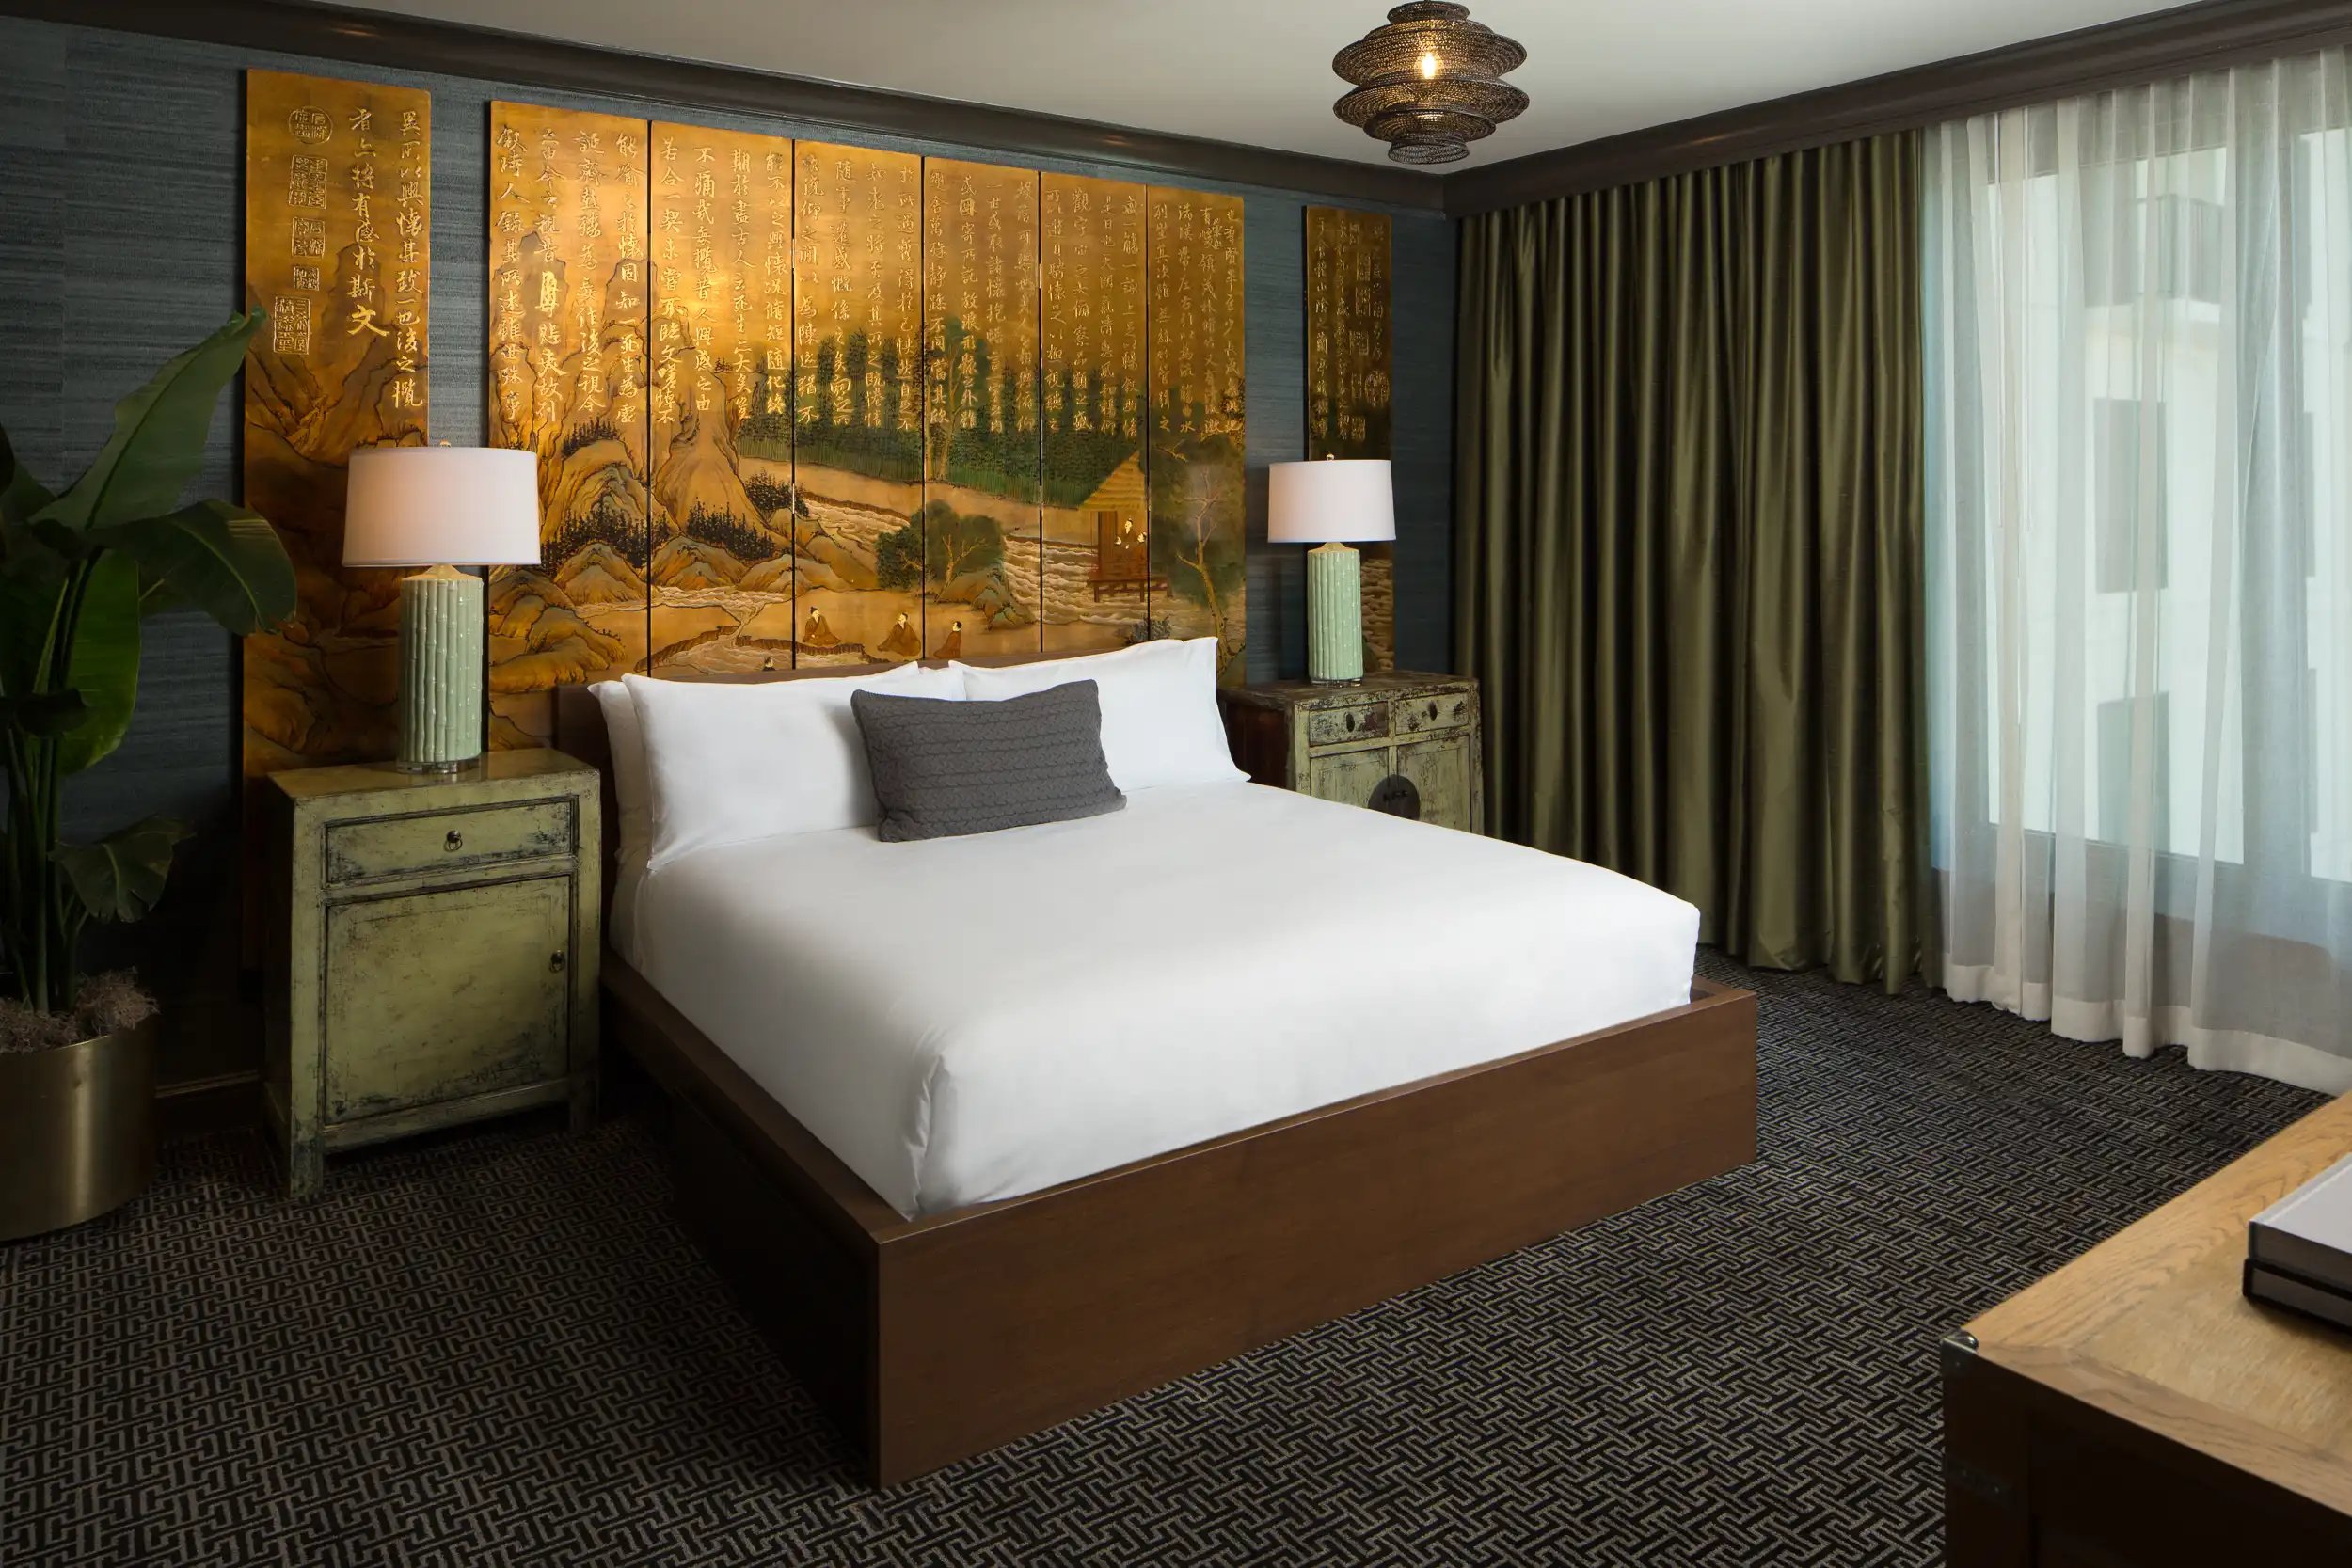 Hotel ZaZa Houston Memorial City Mag7 Suite Asian Beauty 2